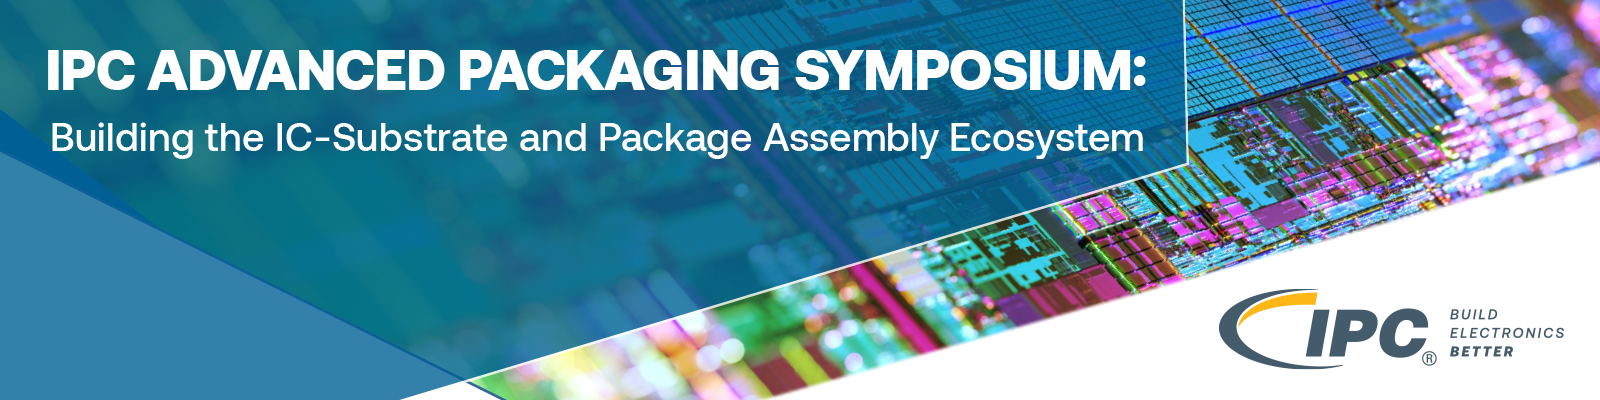 IPC Advance Packaging Symposium